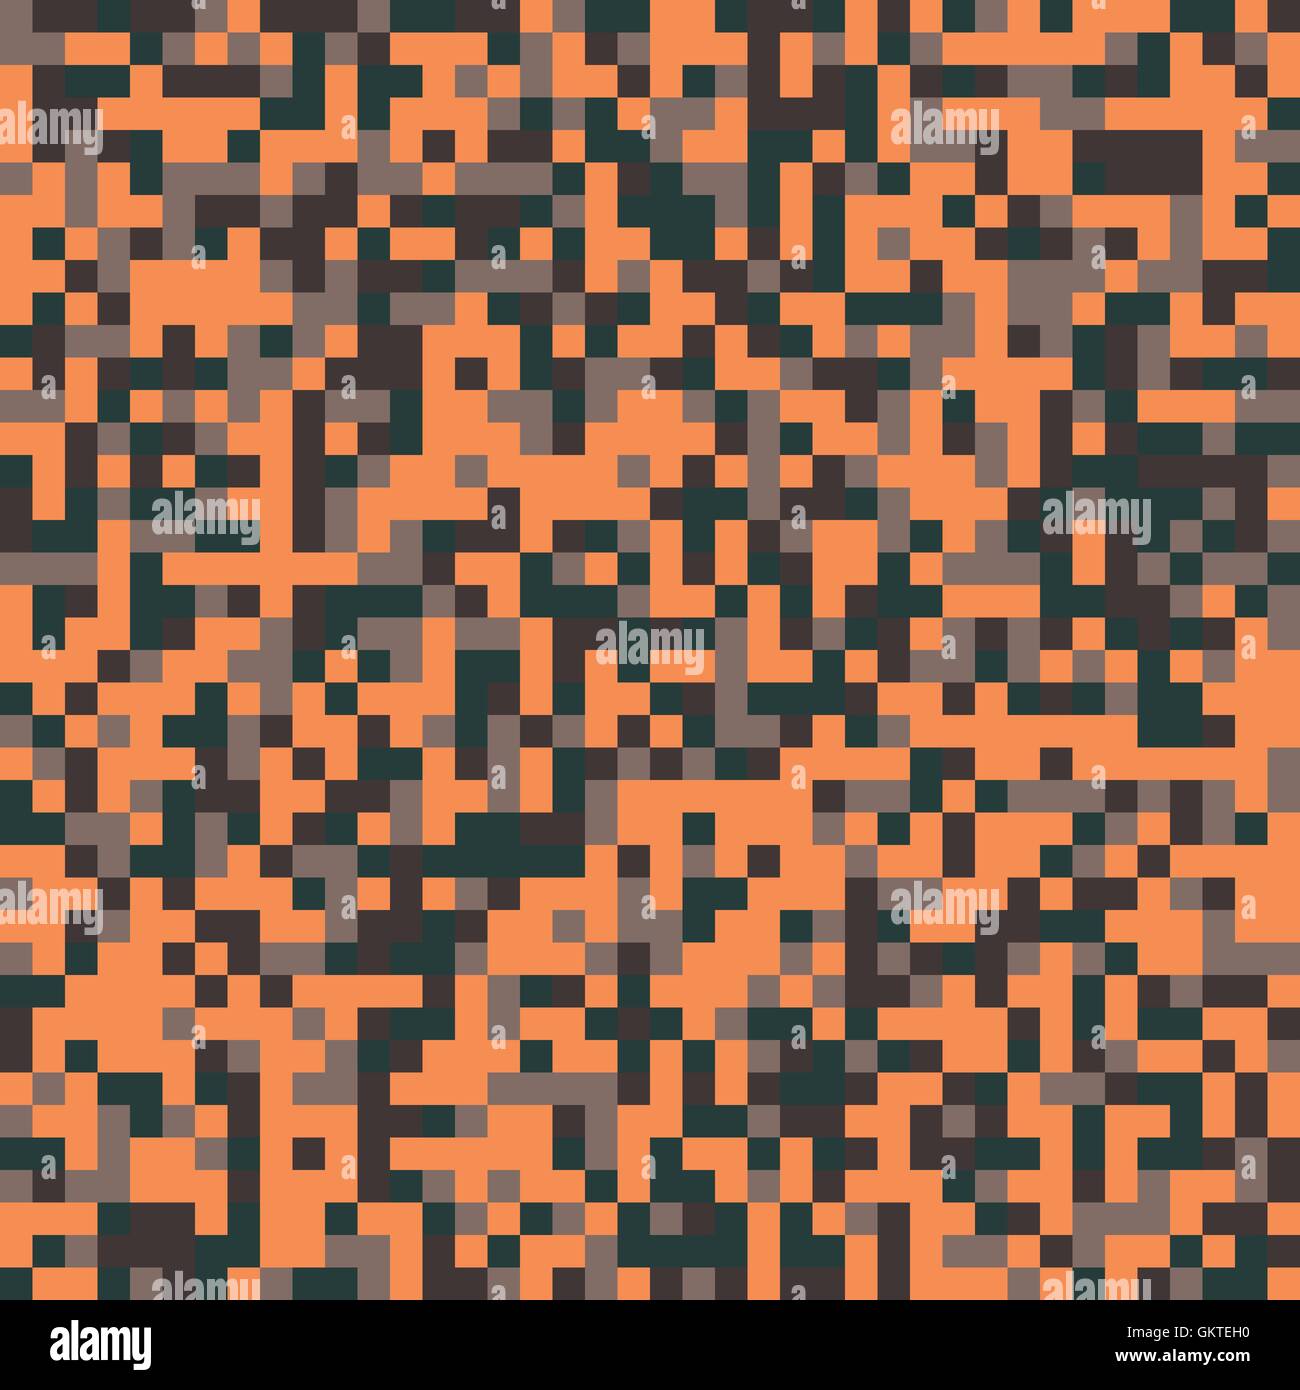 Orange pixels Stock Vector Images - Page 3 - Alamy